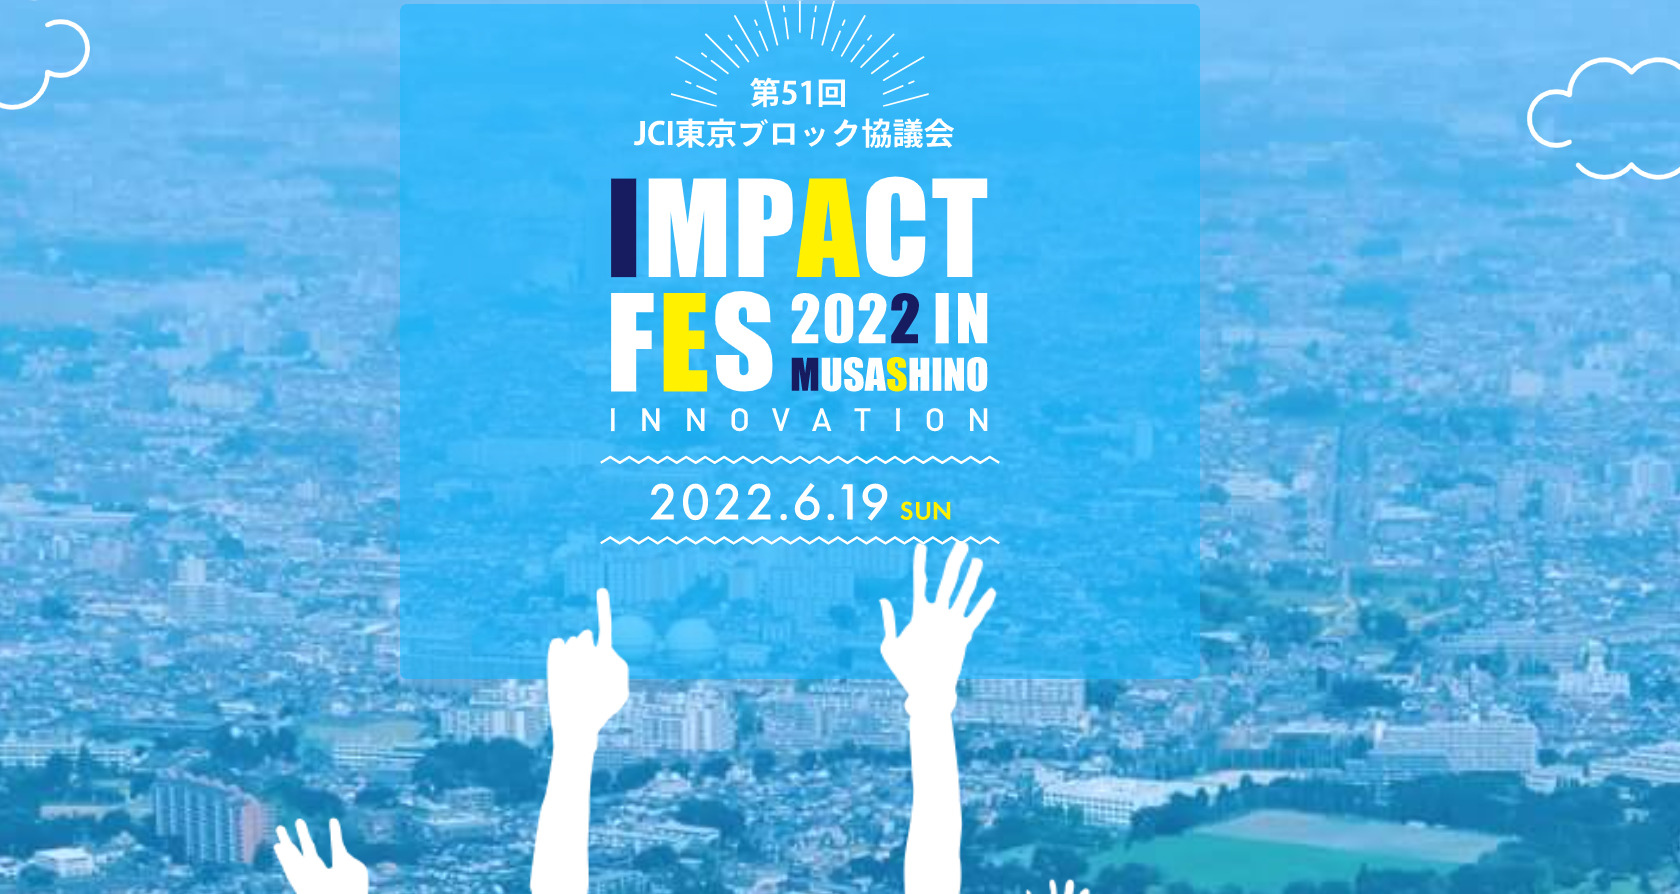 IMPACT FES 2022